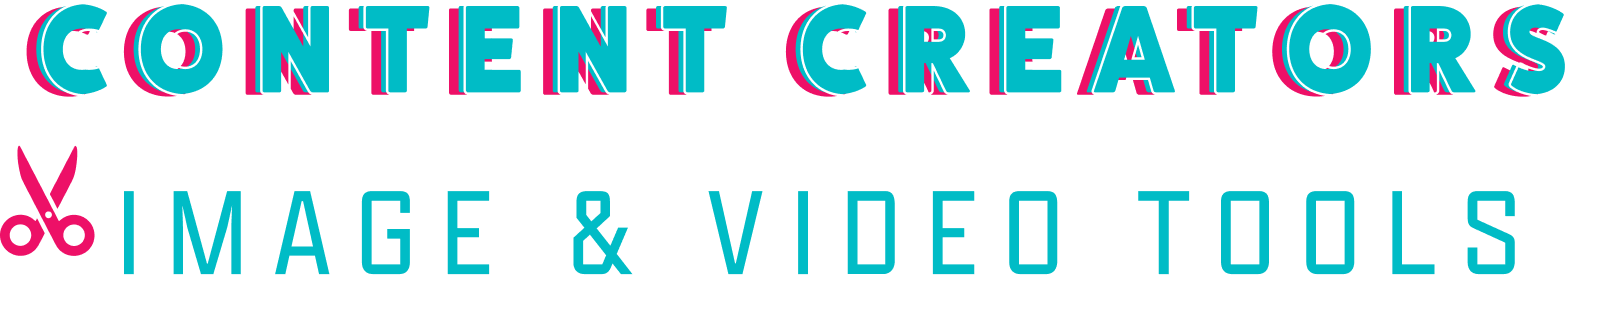 Content Creator's Image & Video Tools Bundle